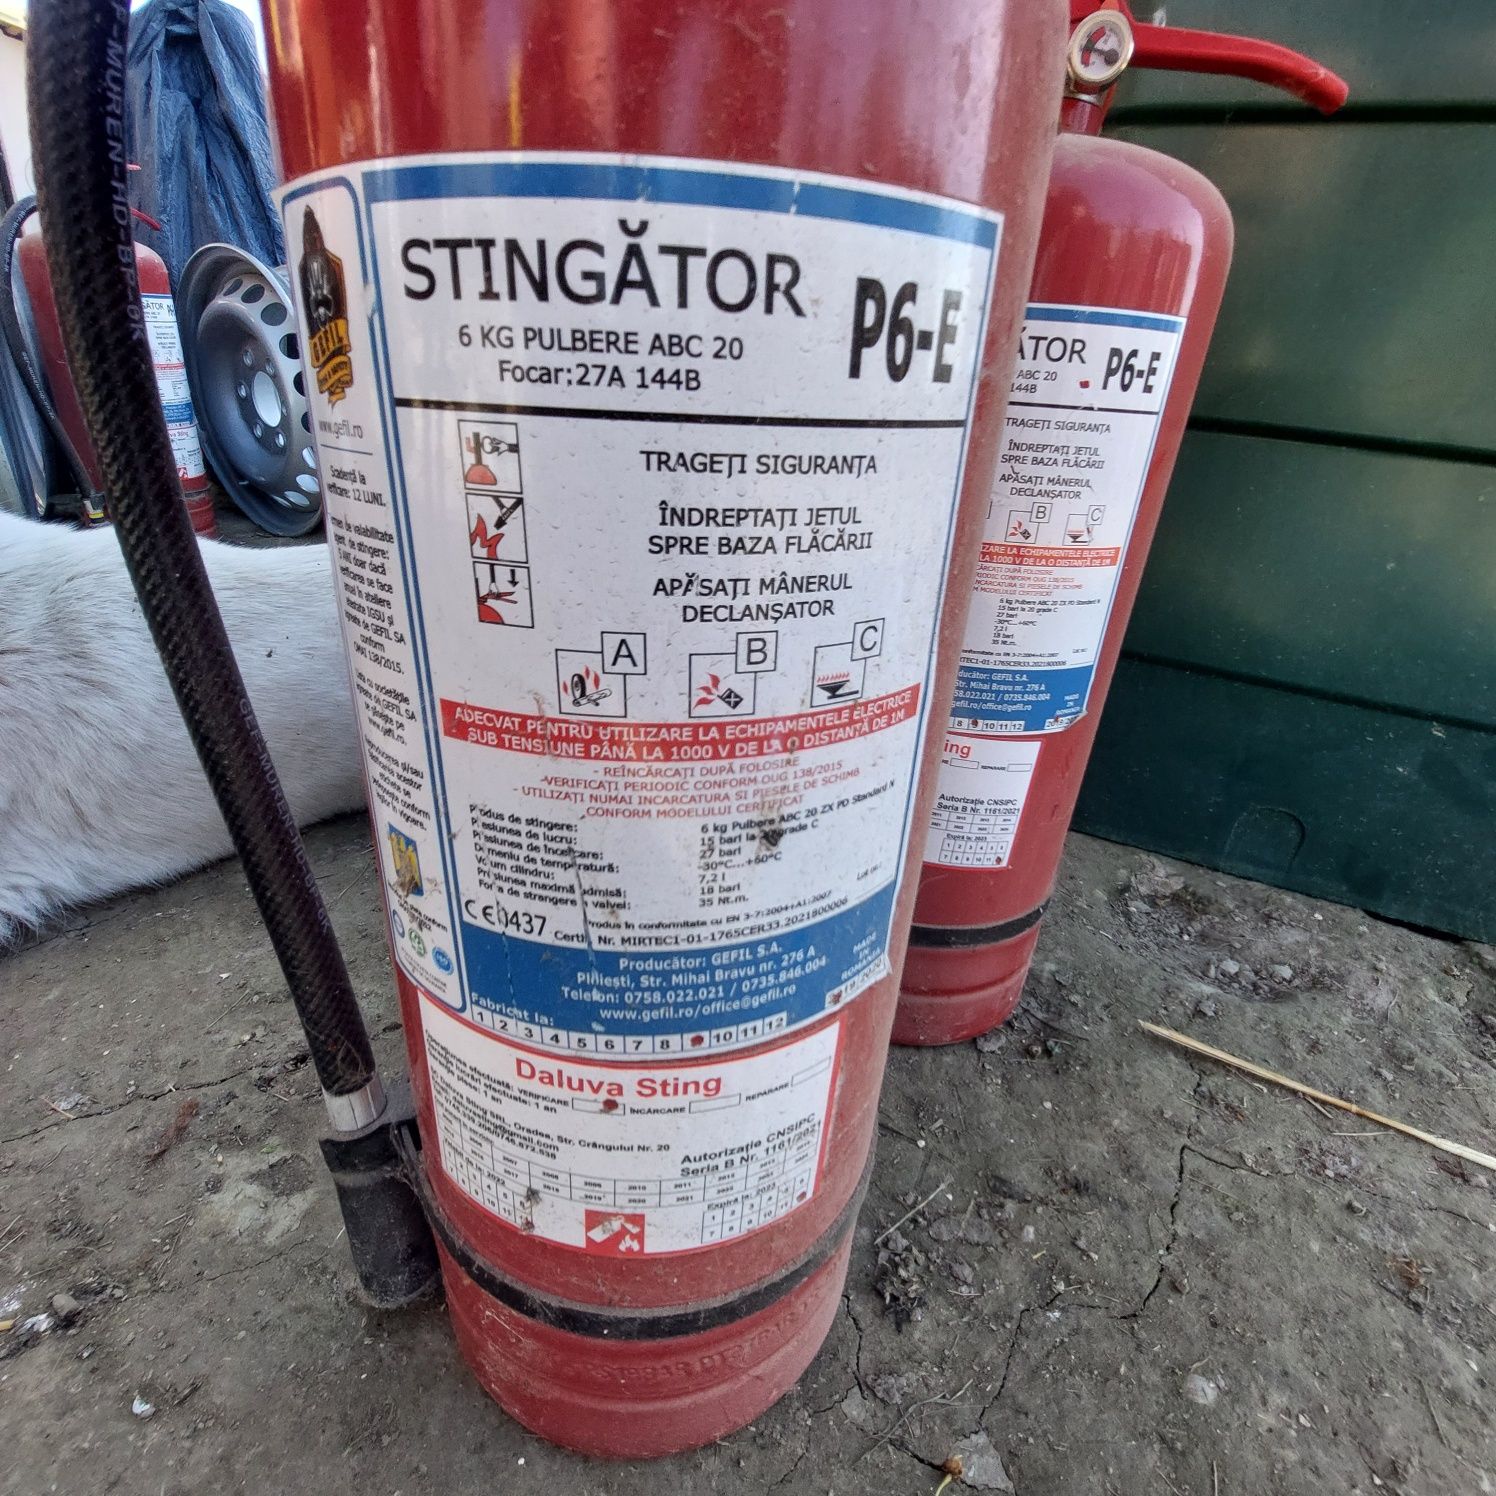 2x Stingator P6-E  60,-RON buc